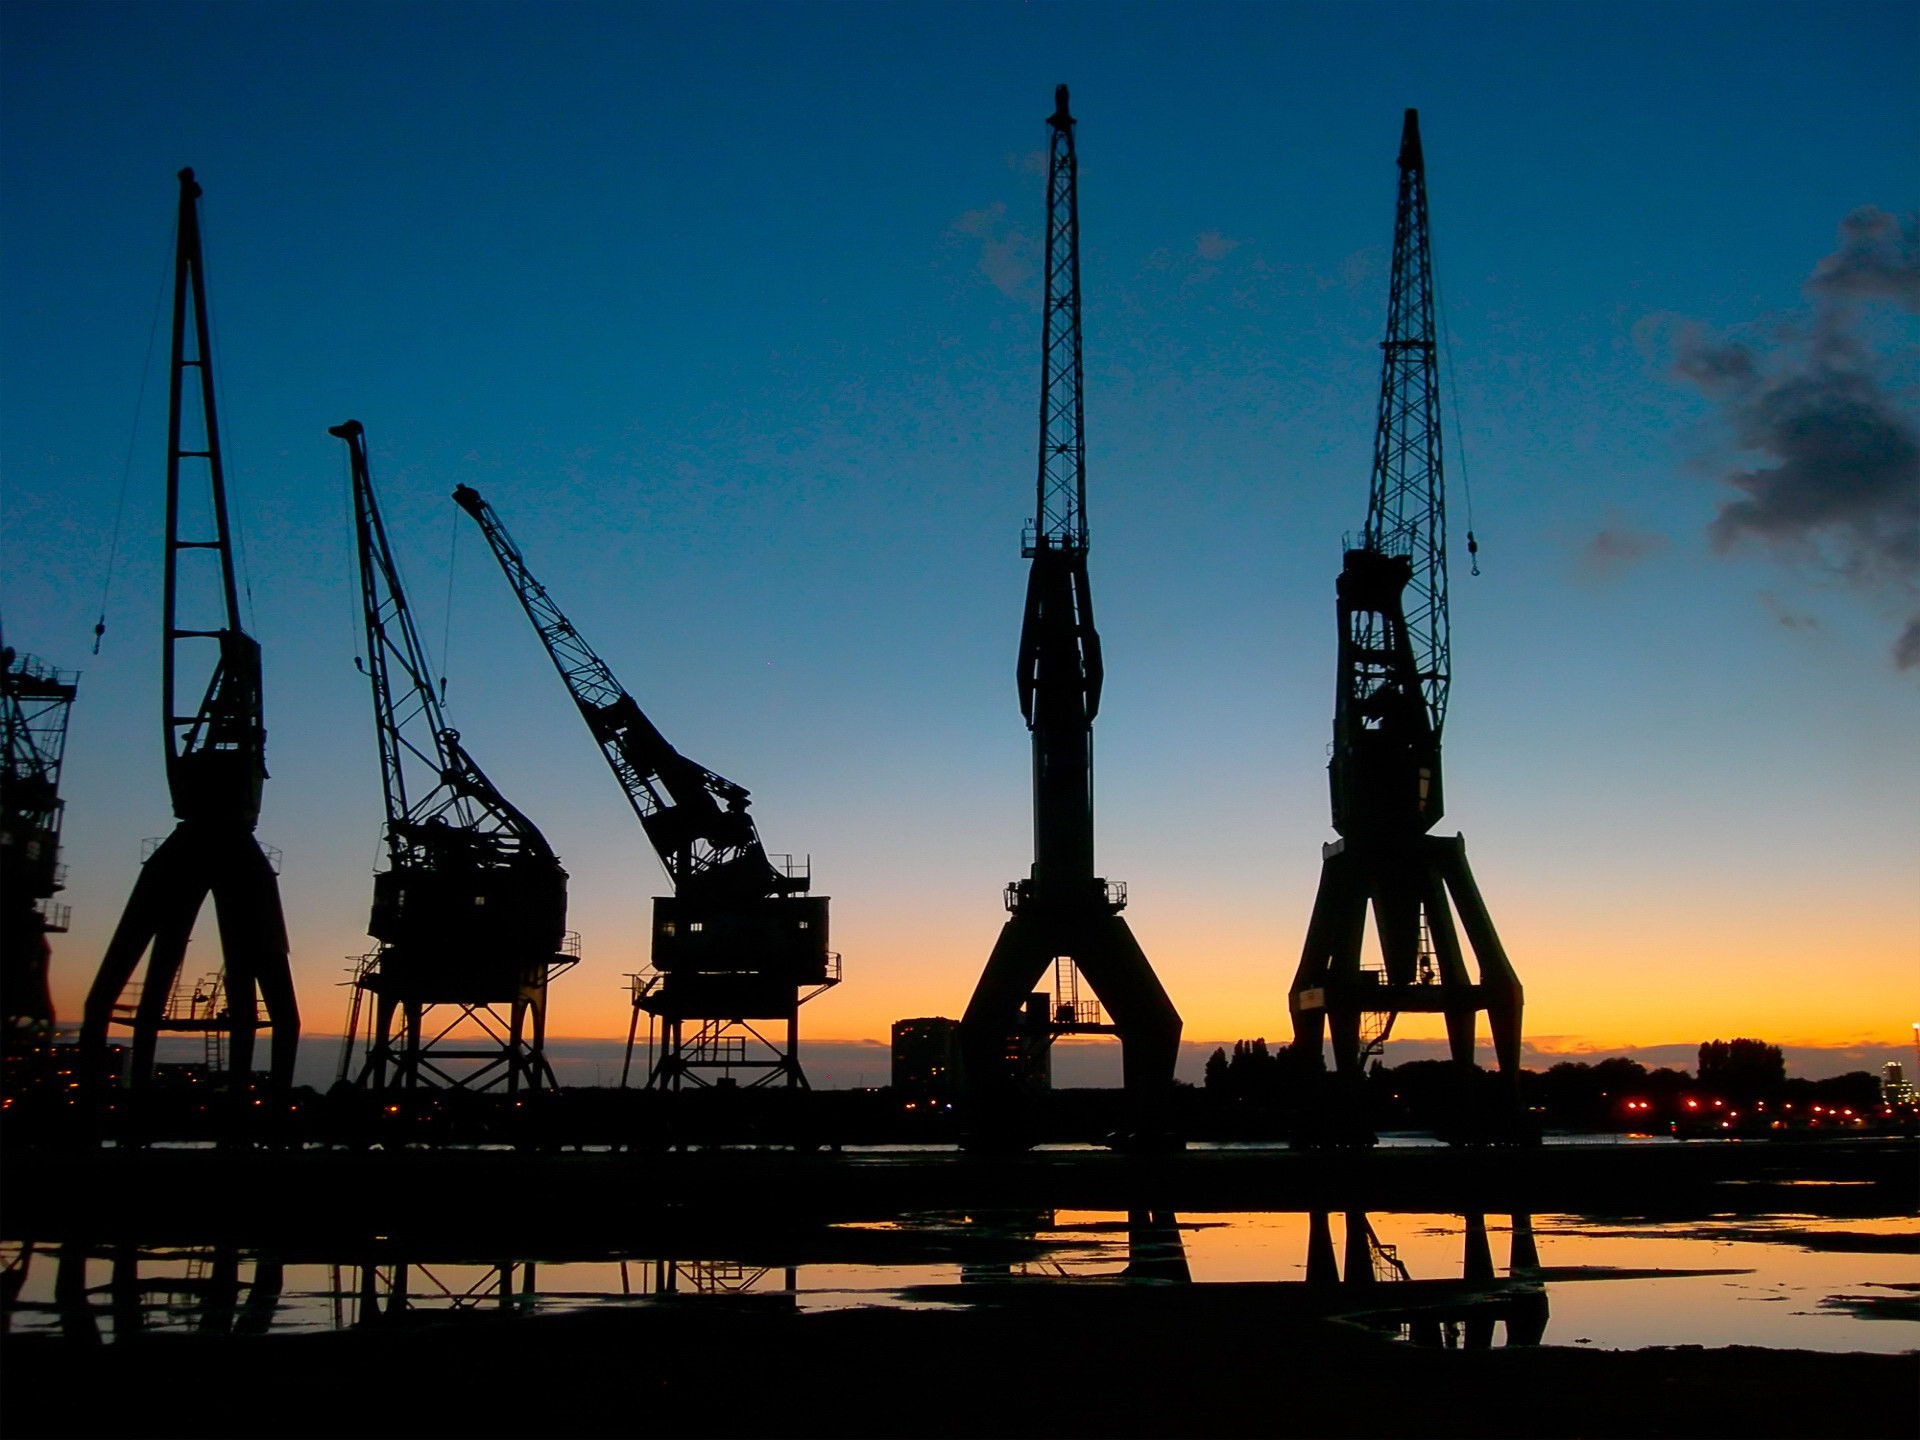 the port crane sunset